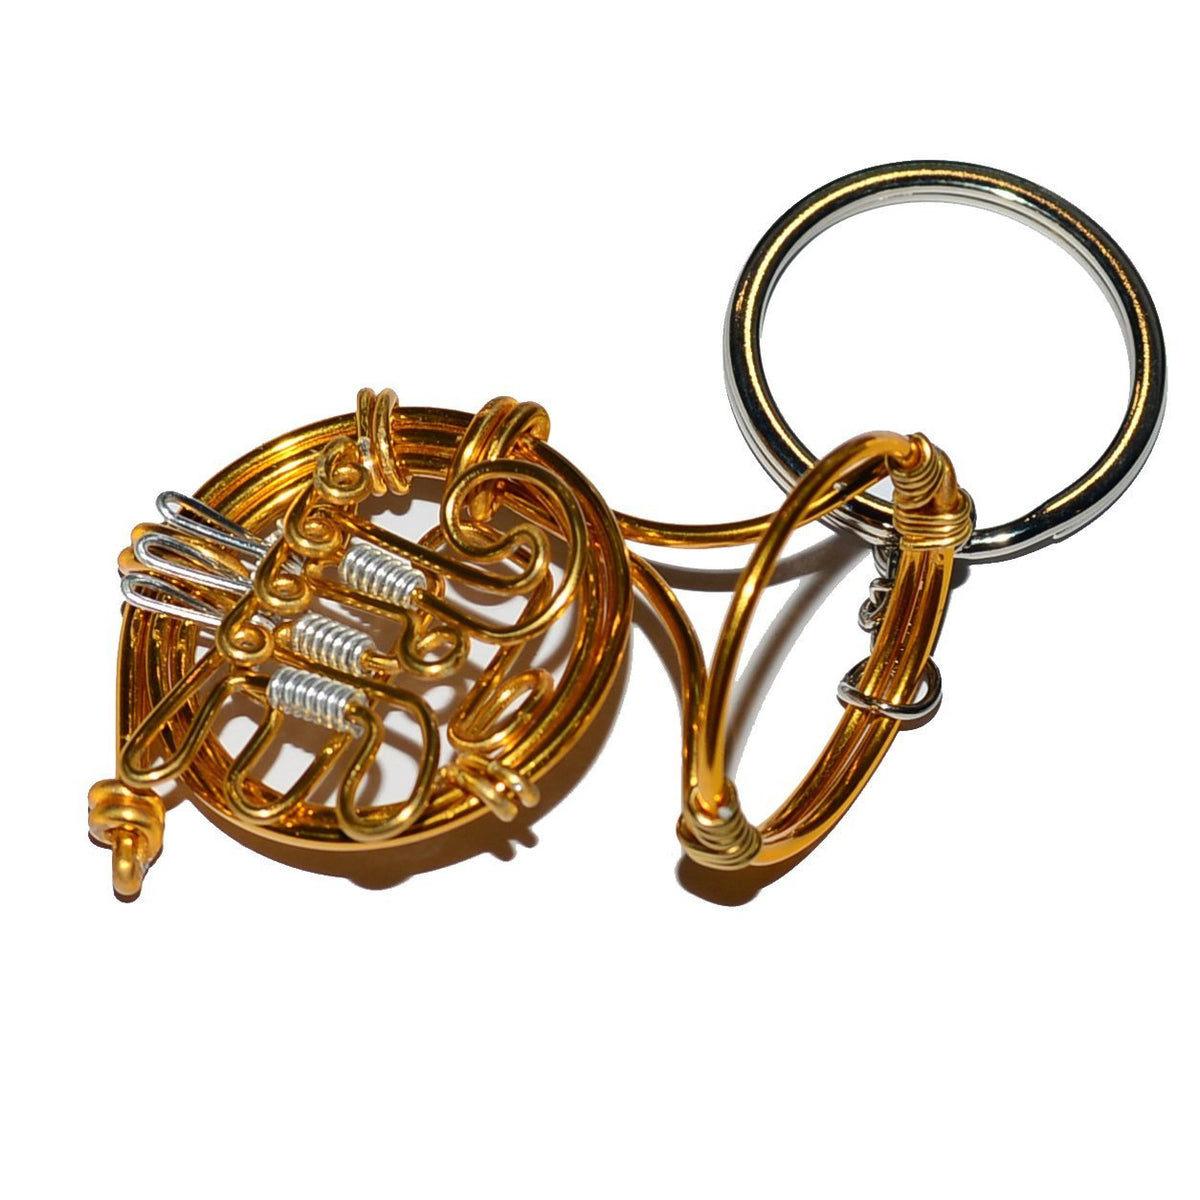 Wire Art Walker - French Horn Keychain-Accessories-Wire Art Walker-Music Elements